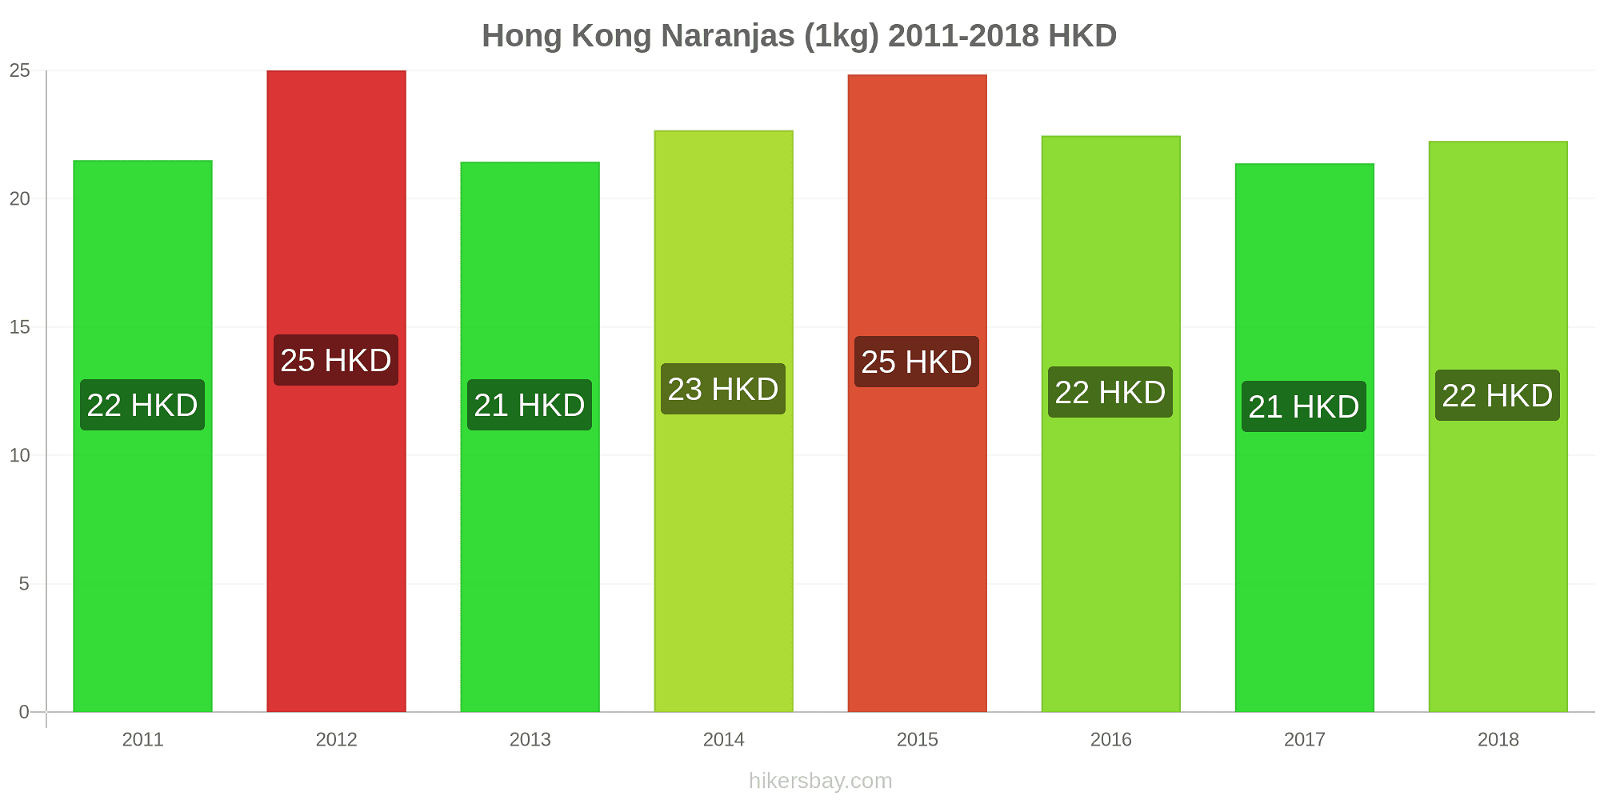 Hong Kong cambios de precios Naranjas (1kg) hikersbay.com